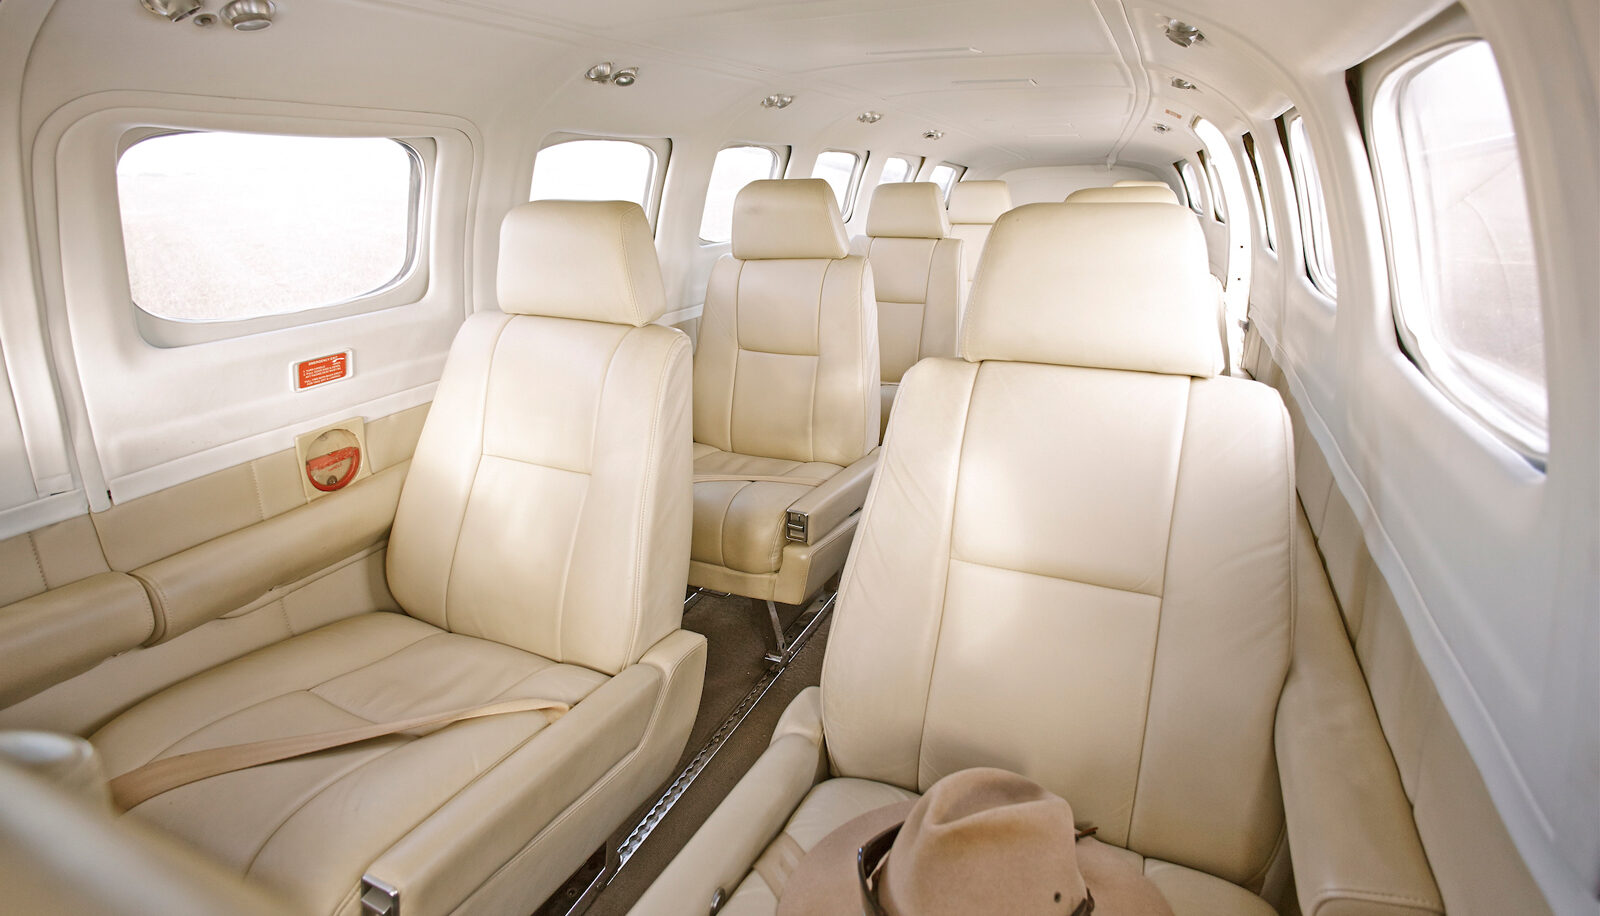 Luxury Private jet tours and air safaris across Australia